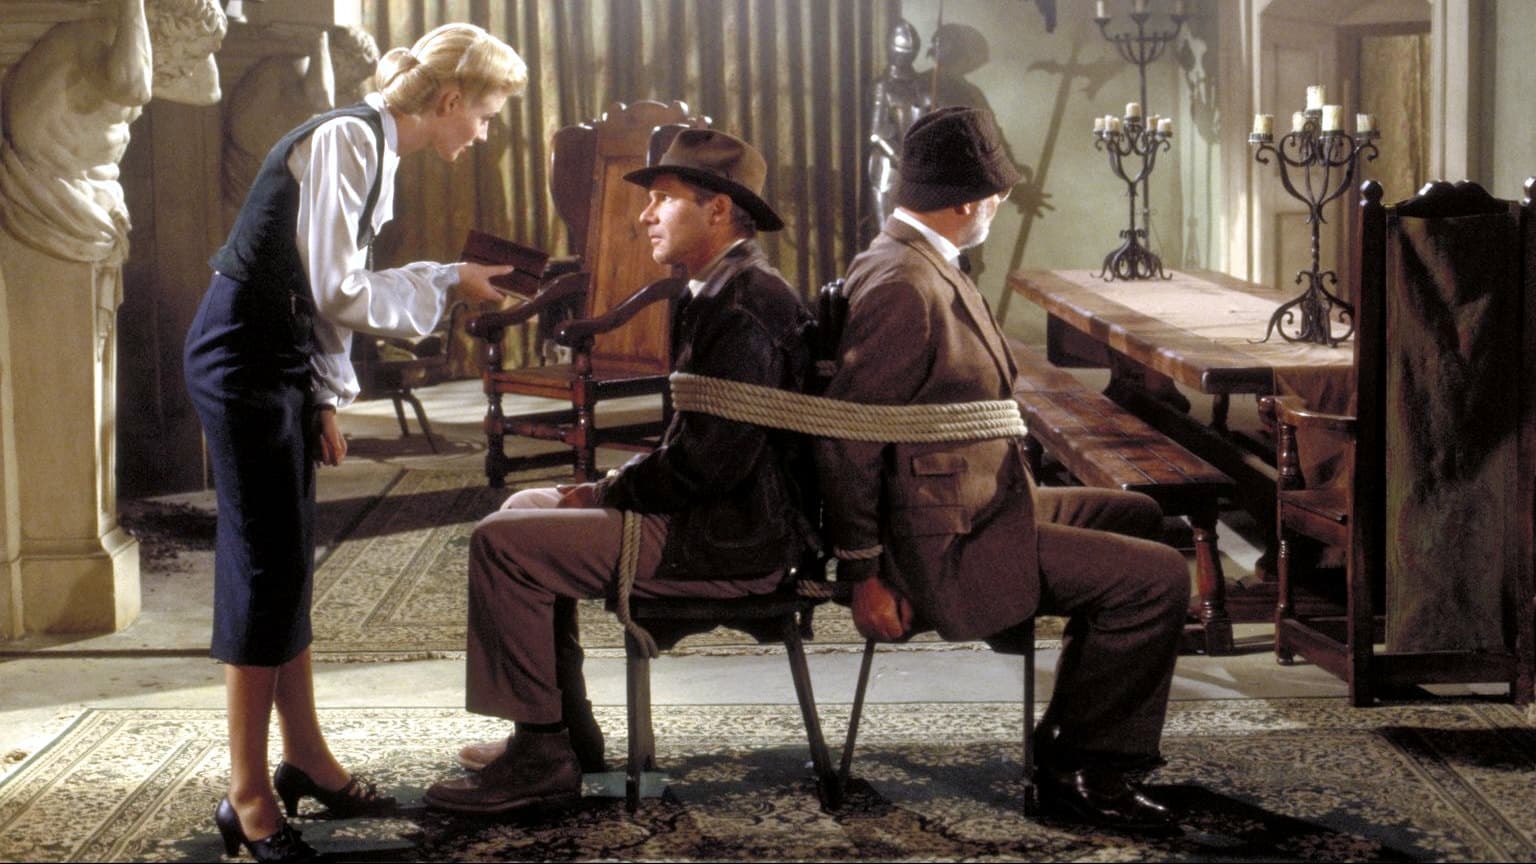 Image du film Indiana Jones et la Dernière Croisade pc3mddpzdb16ucdwna8mnygk6bpjpg